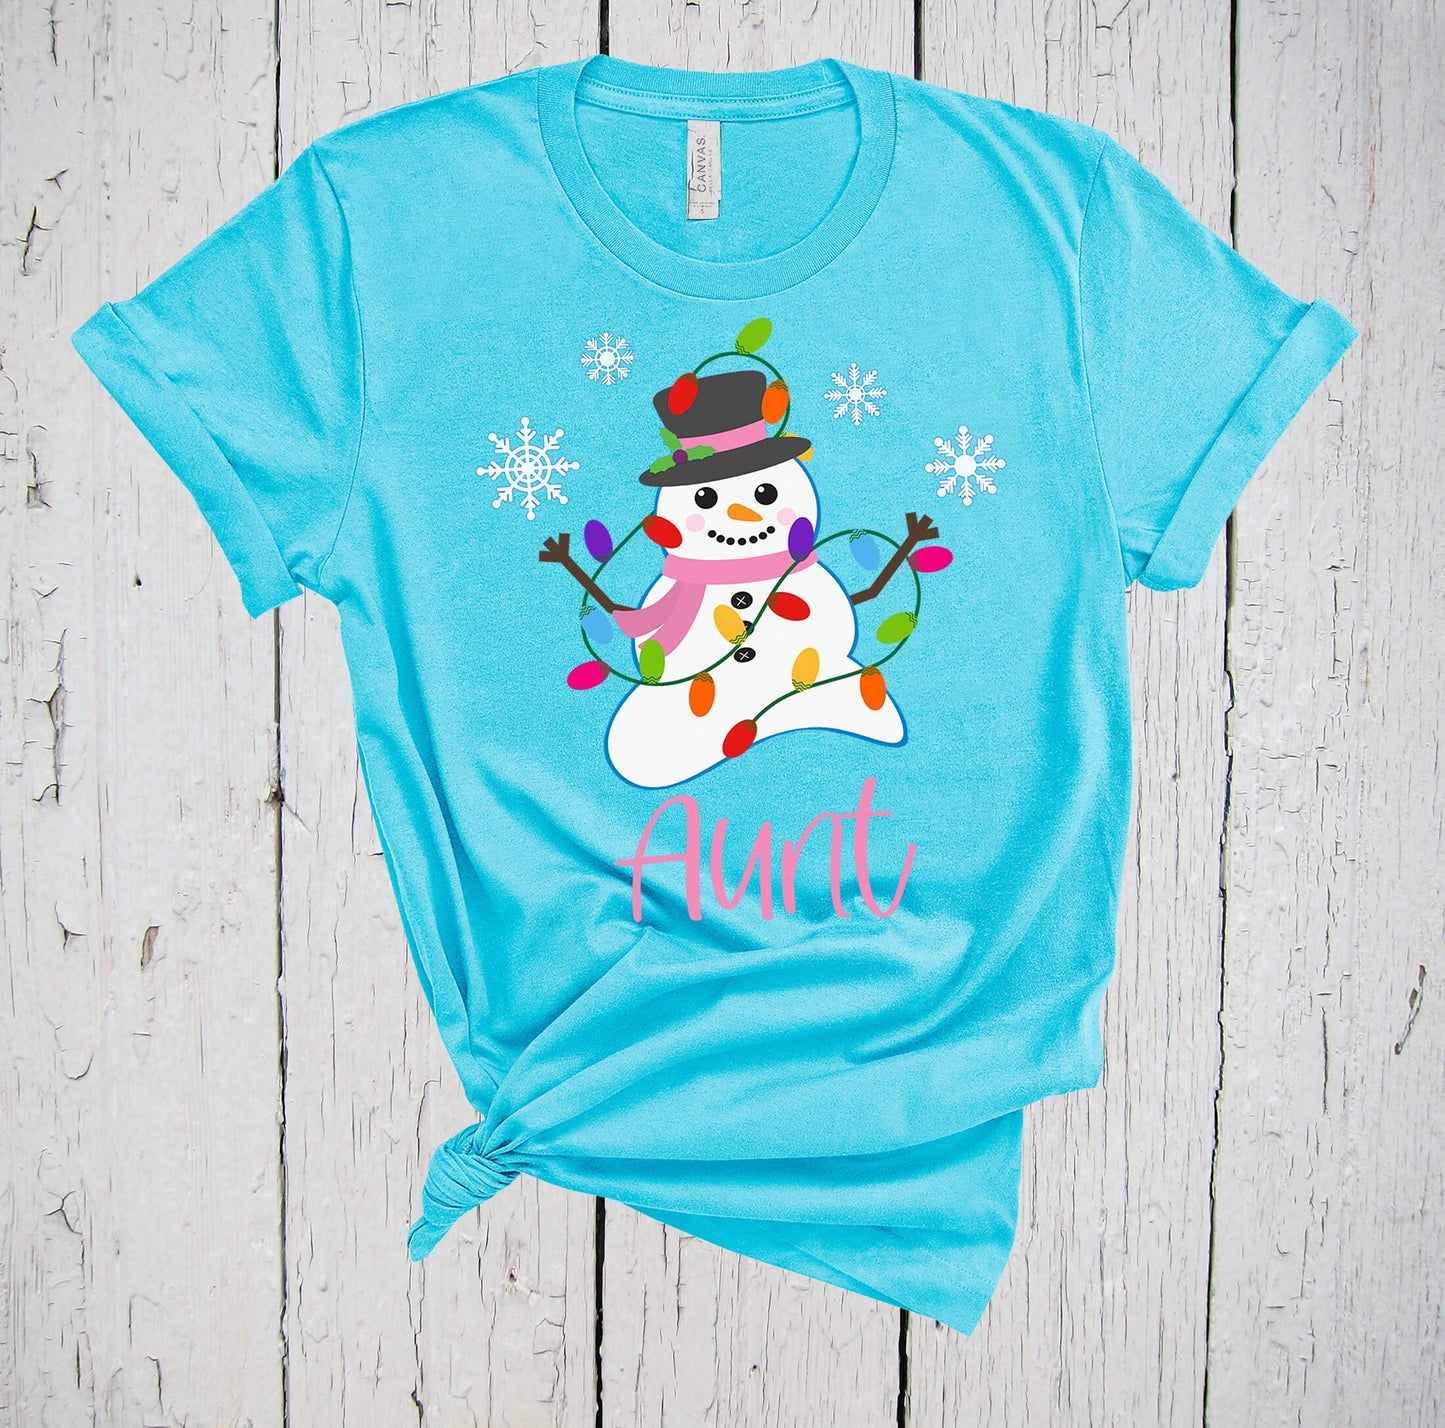 Aunt Snowman, Cute Christmas Shirt, Snowman Tee, Custom Shirt, Personalized Shirt, Holiday Shirt, Snowman Shirt, Aunt Shirt, Christmas Tee